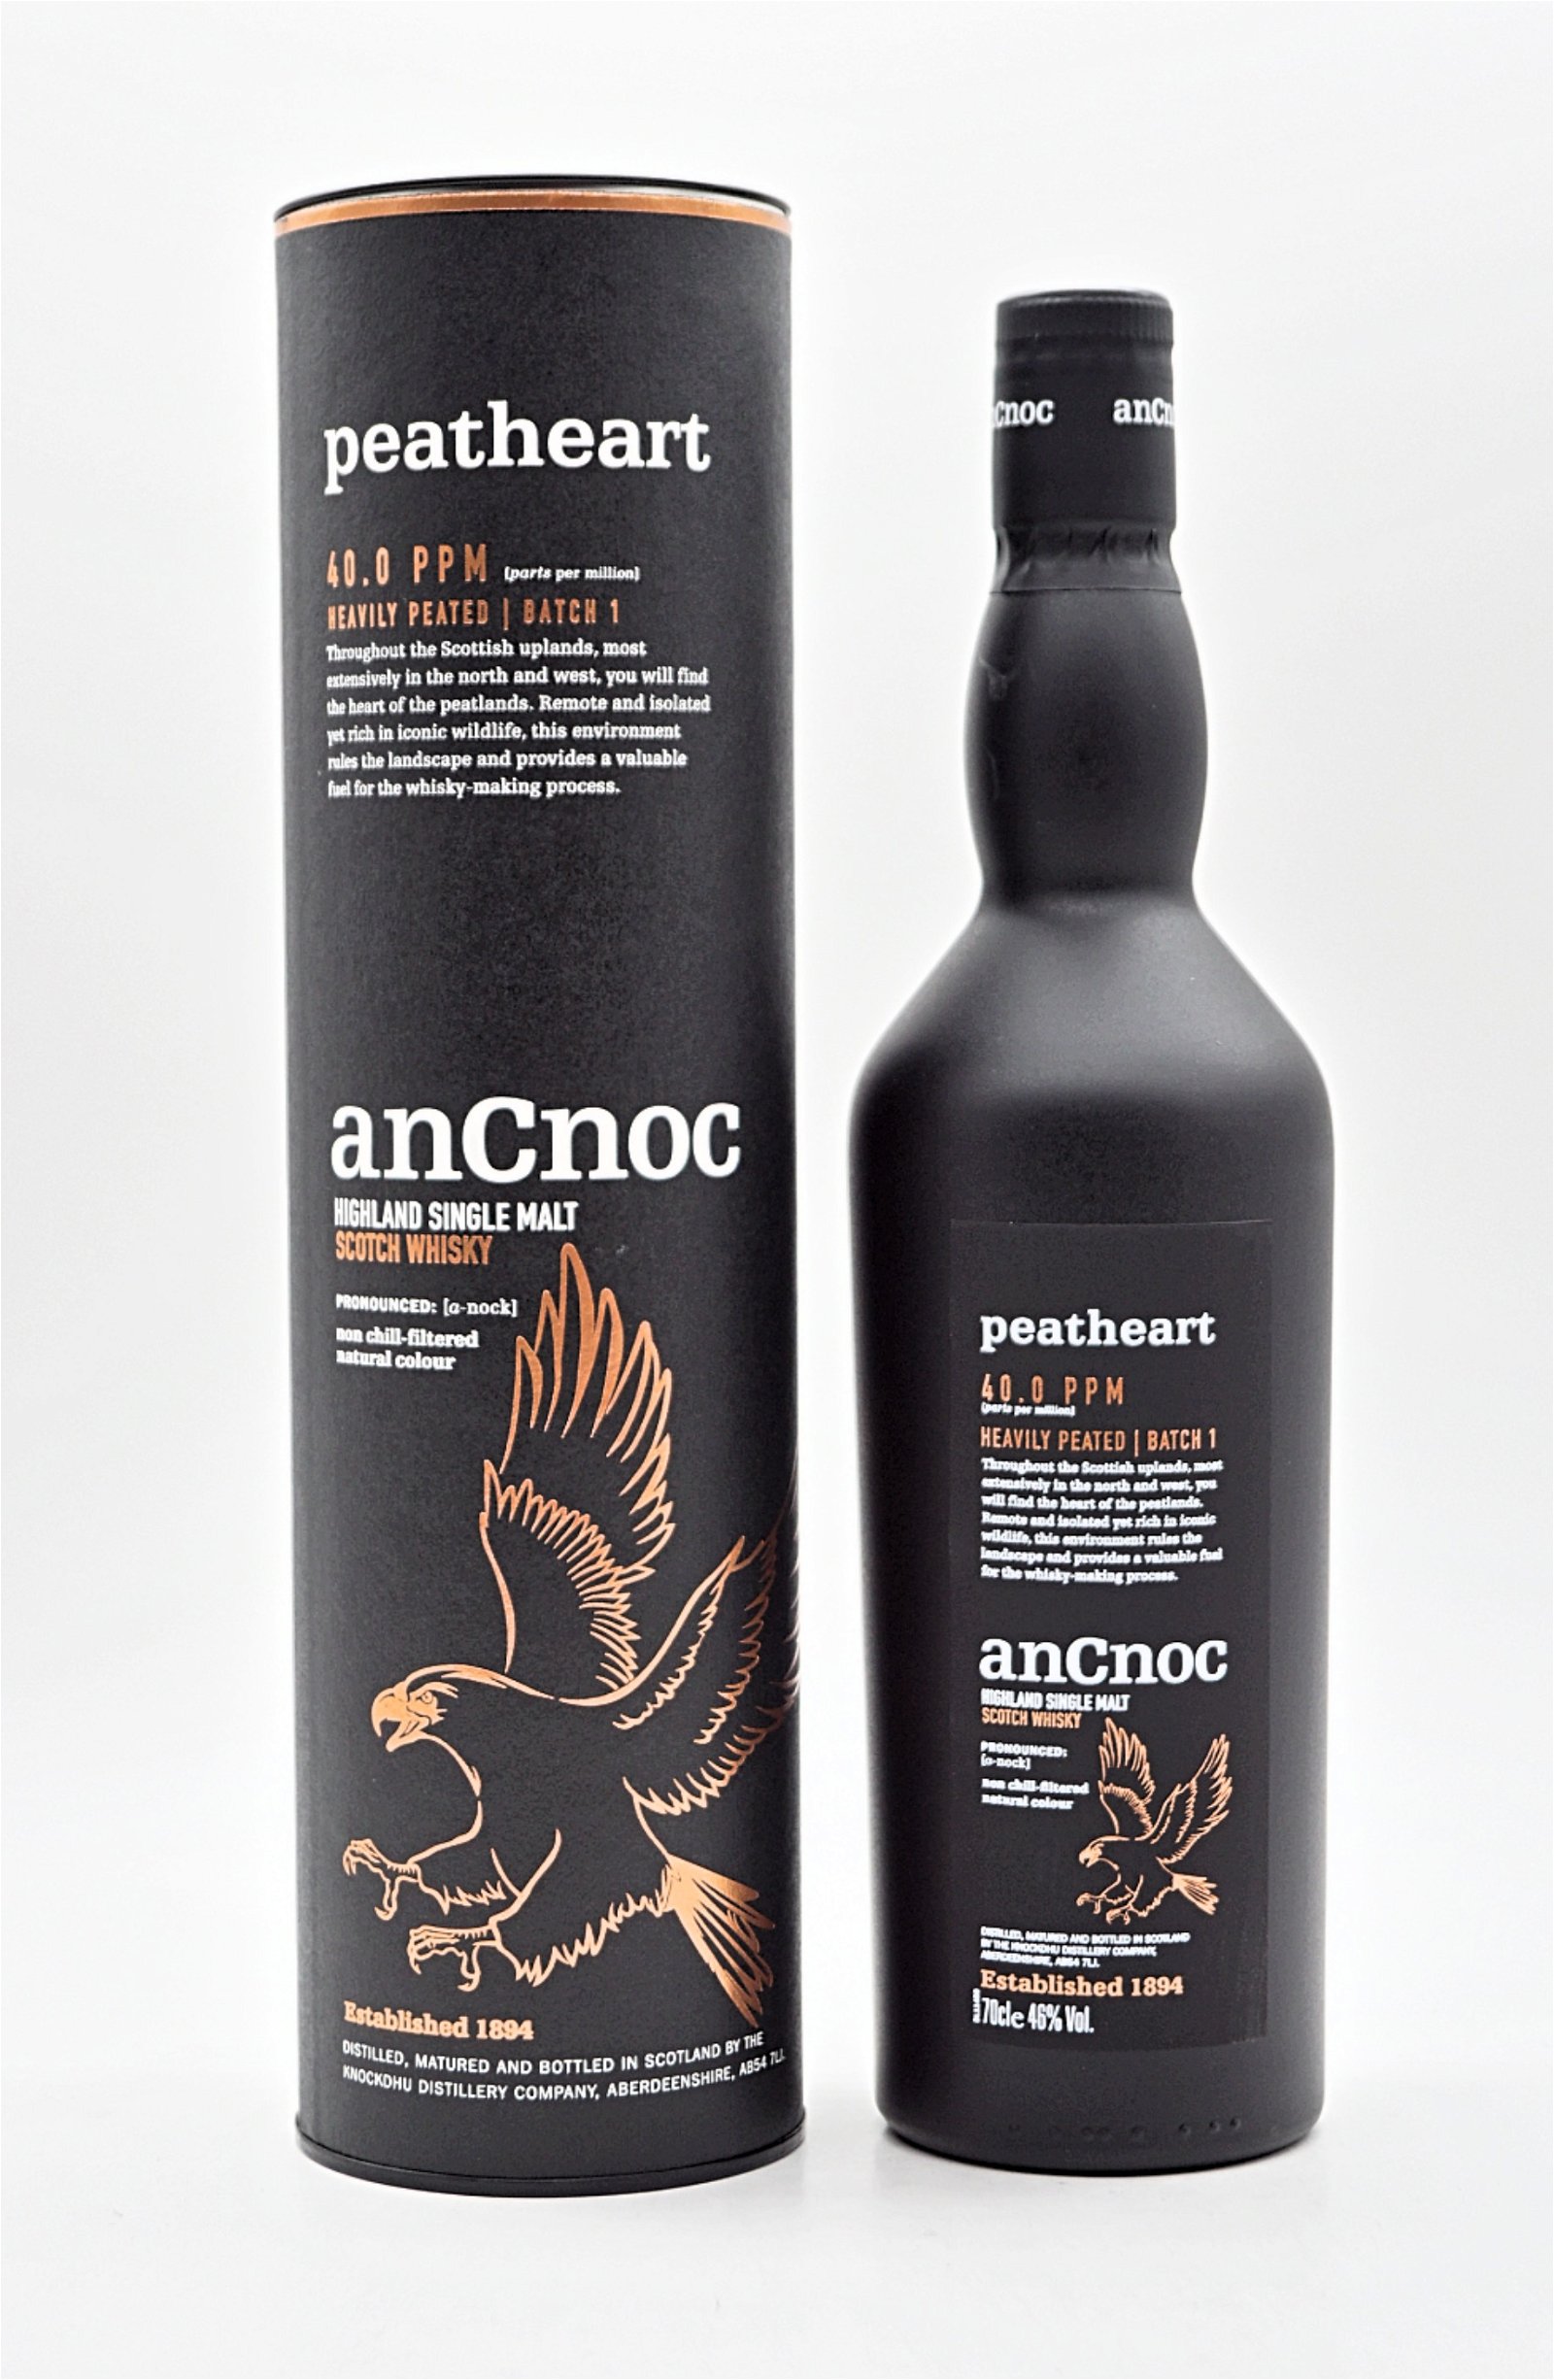 anCnoc Peatheart 40,0 PPM Heavily Peated Batch 1 Highland Single Malt Scotch Whisky